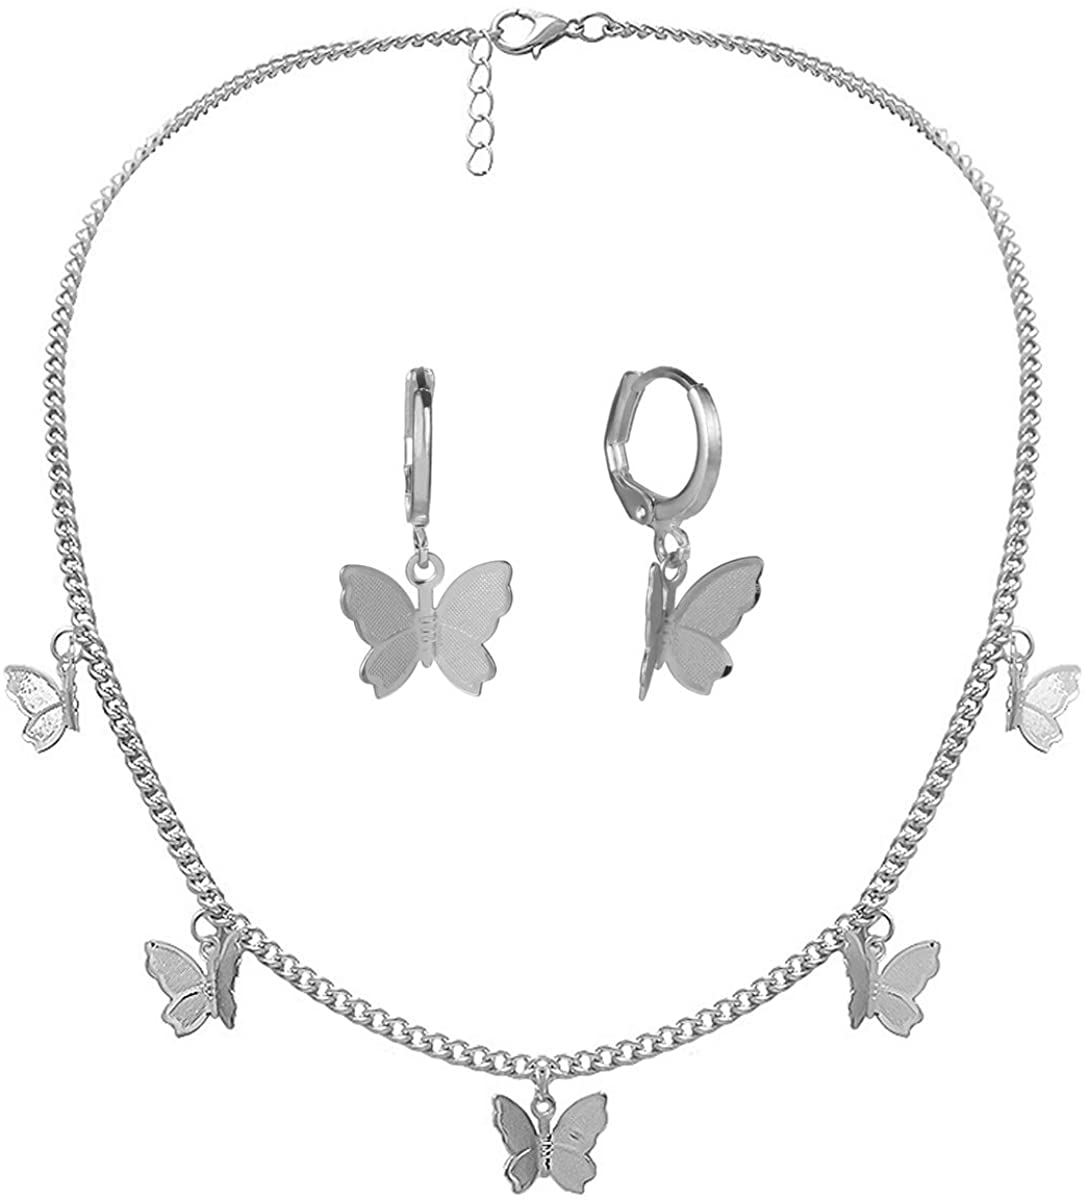 Adjustable Butterfly Necklace Earrings Set